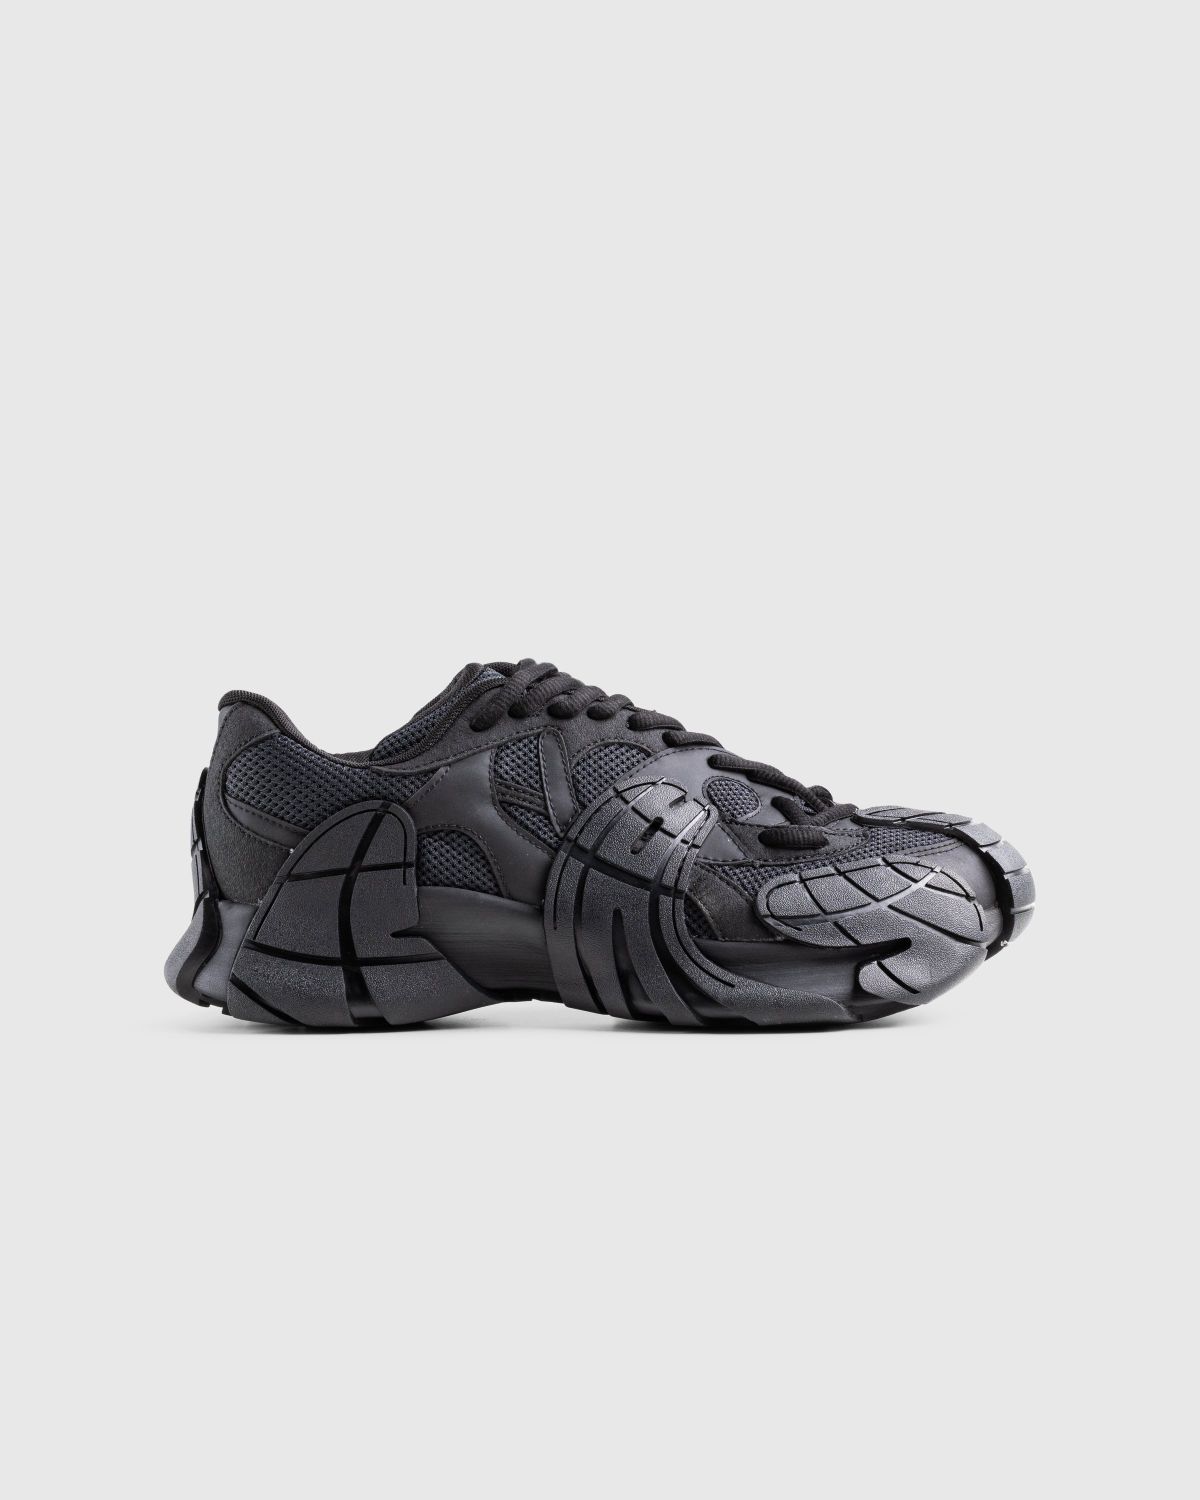 CAMPERLAB – Tormenta Black - Low Top Sneakers - Black - Image 1